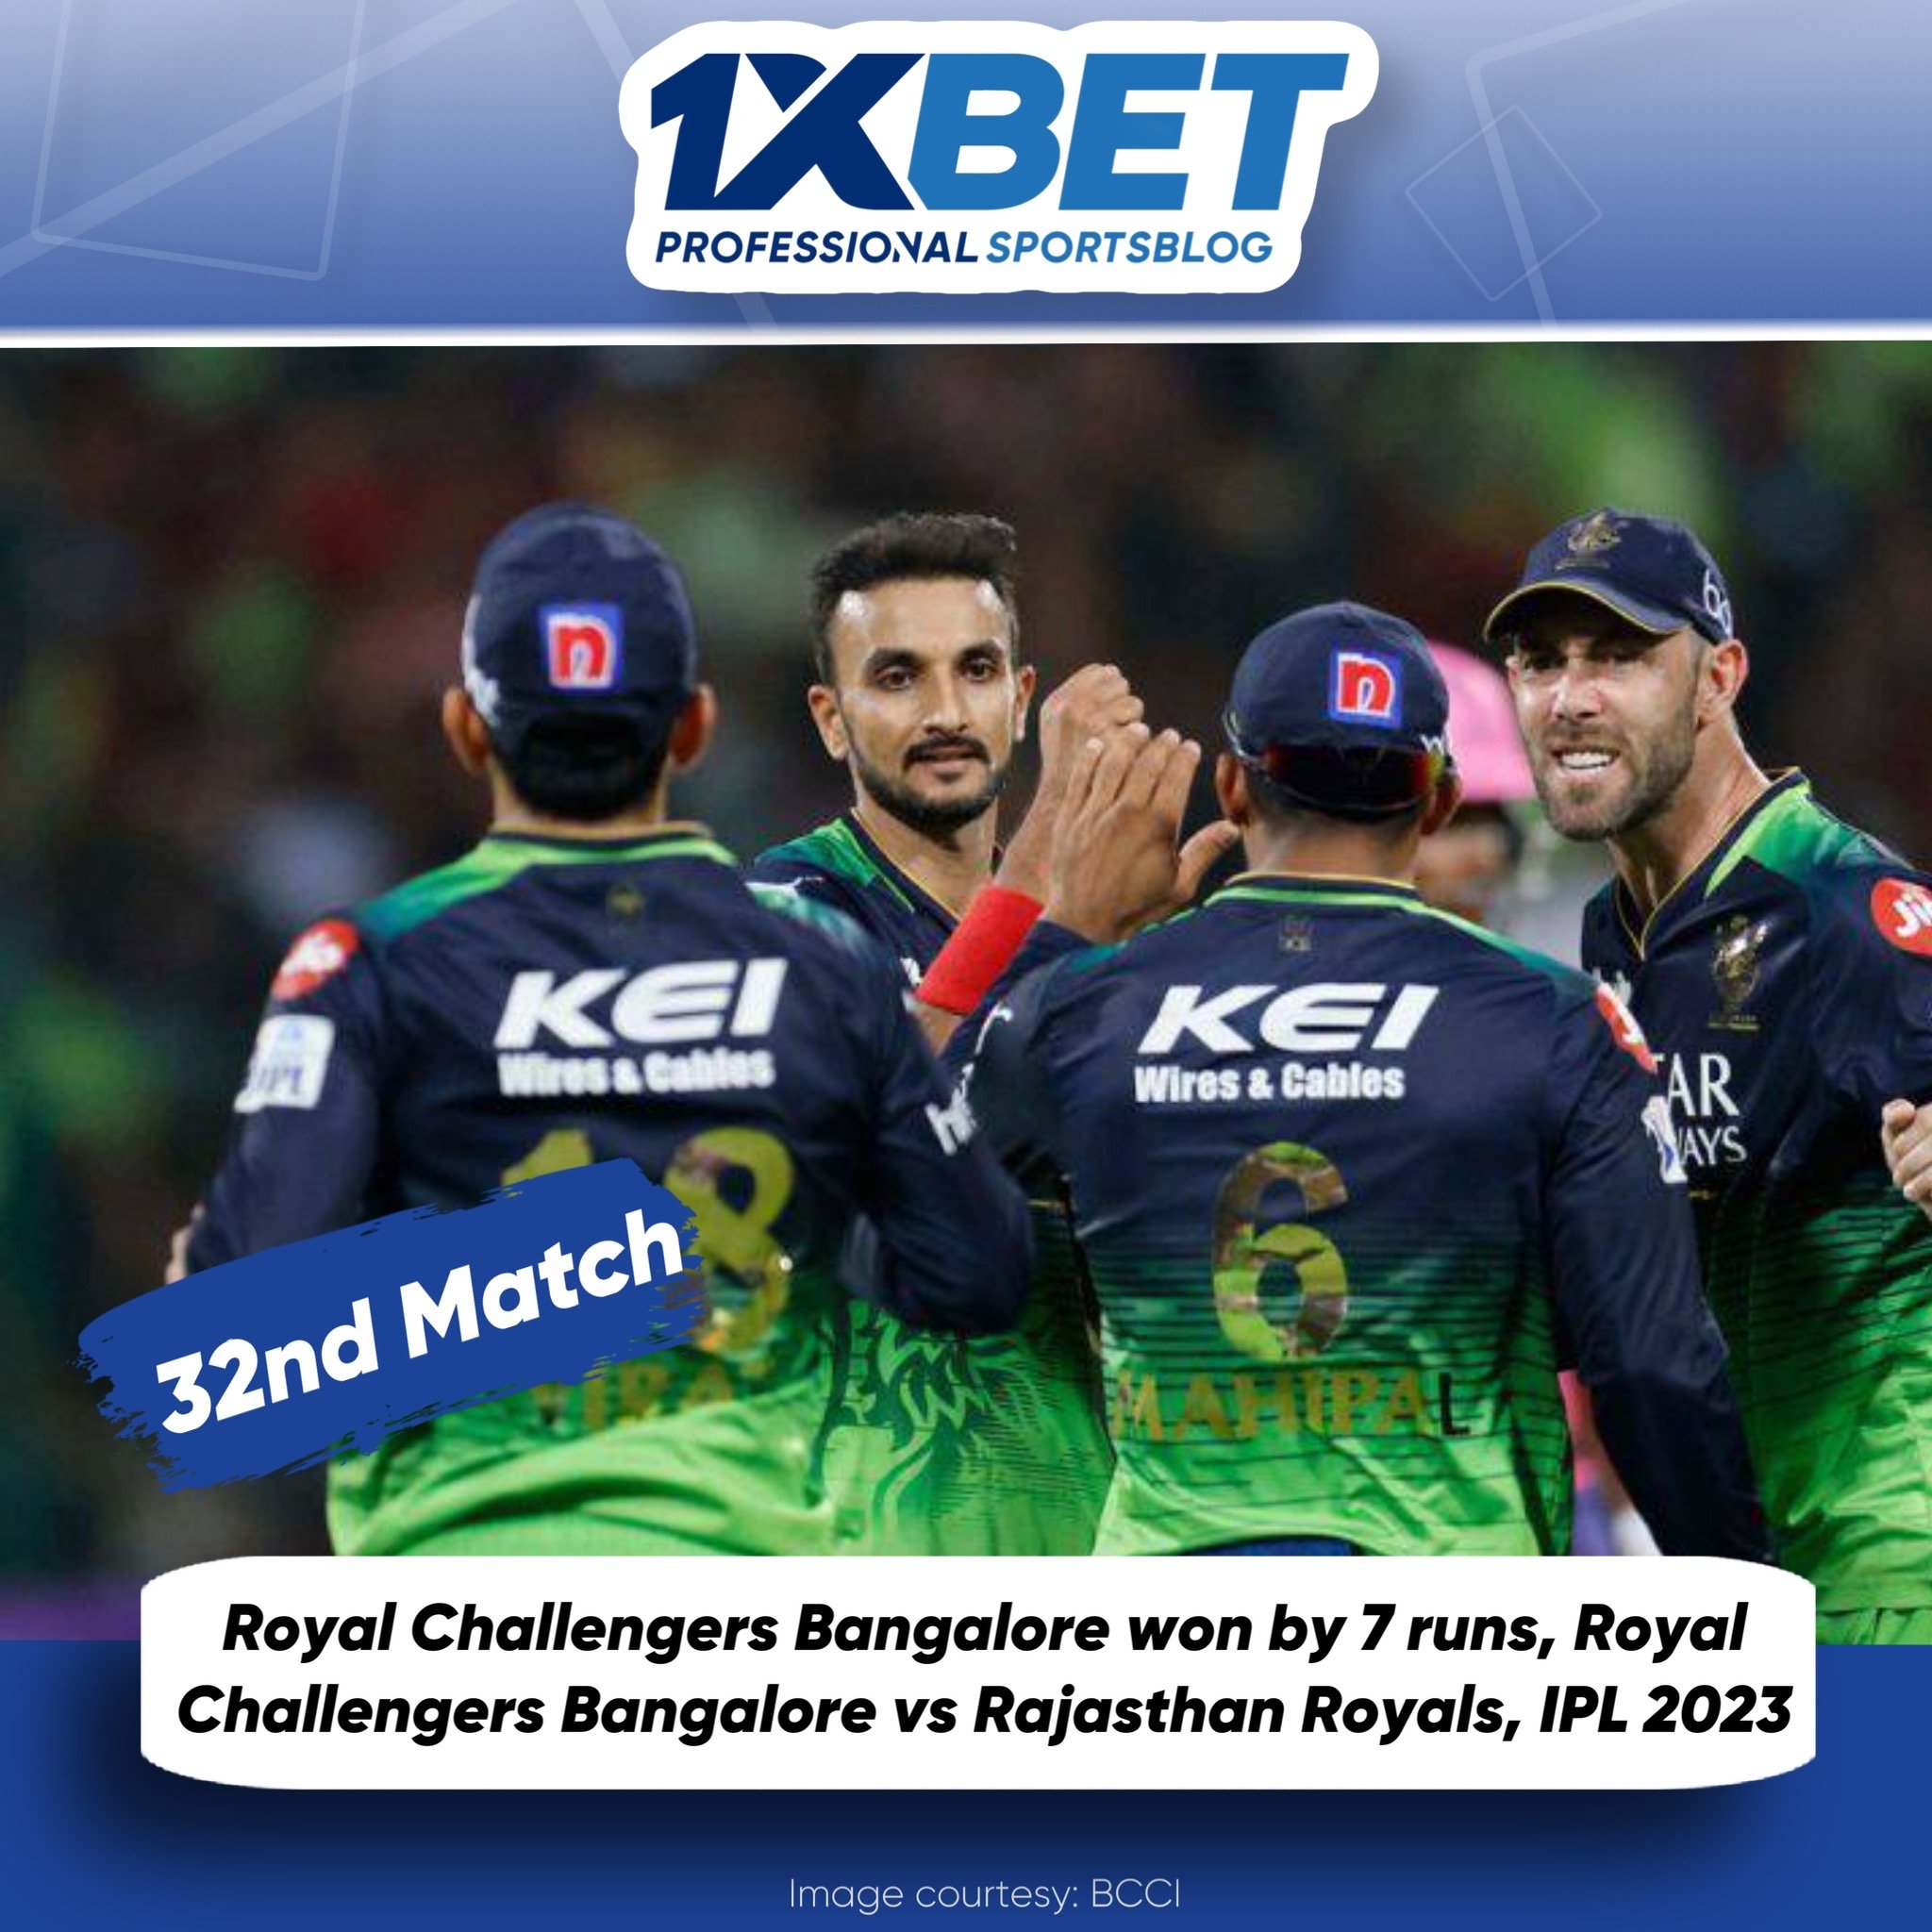 Royal Challengers Bangalore won by 7 runs